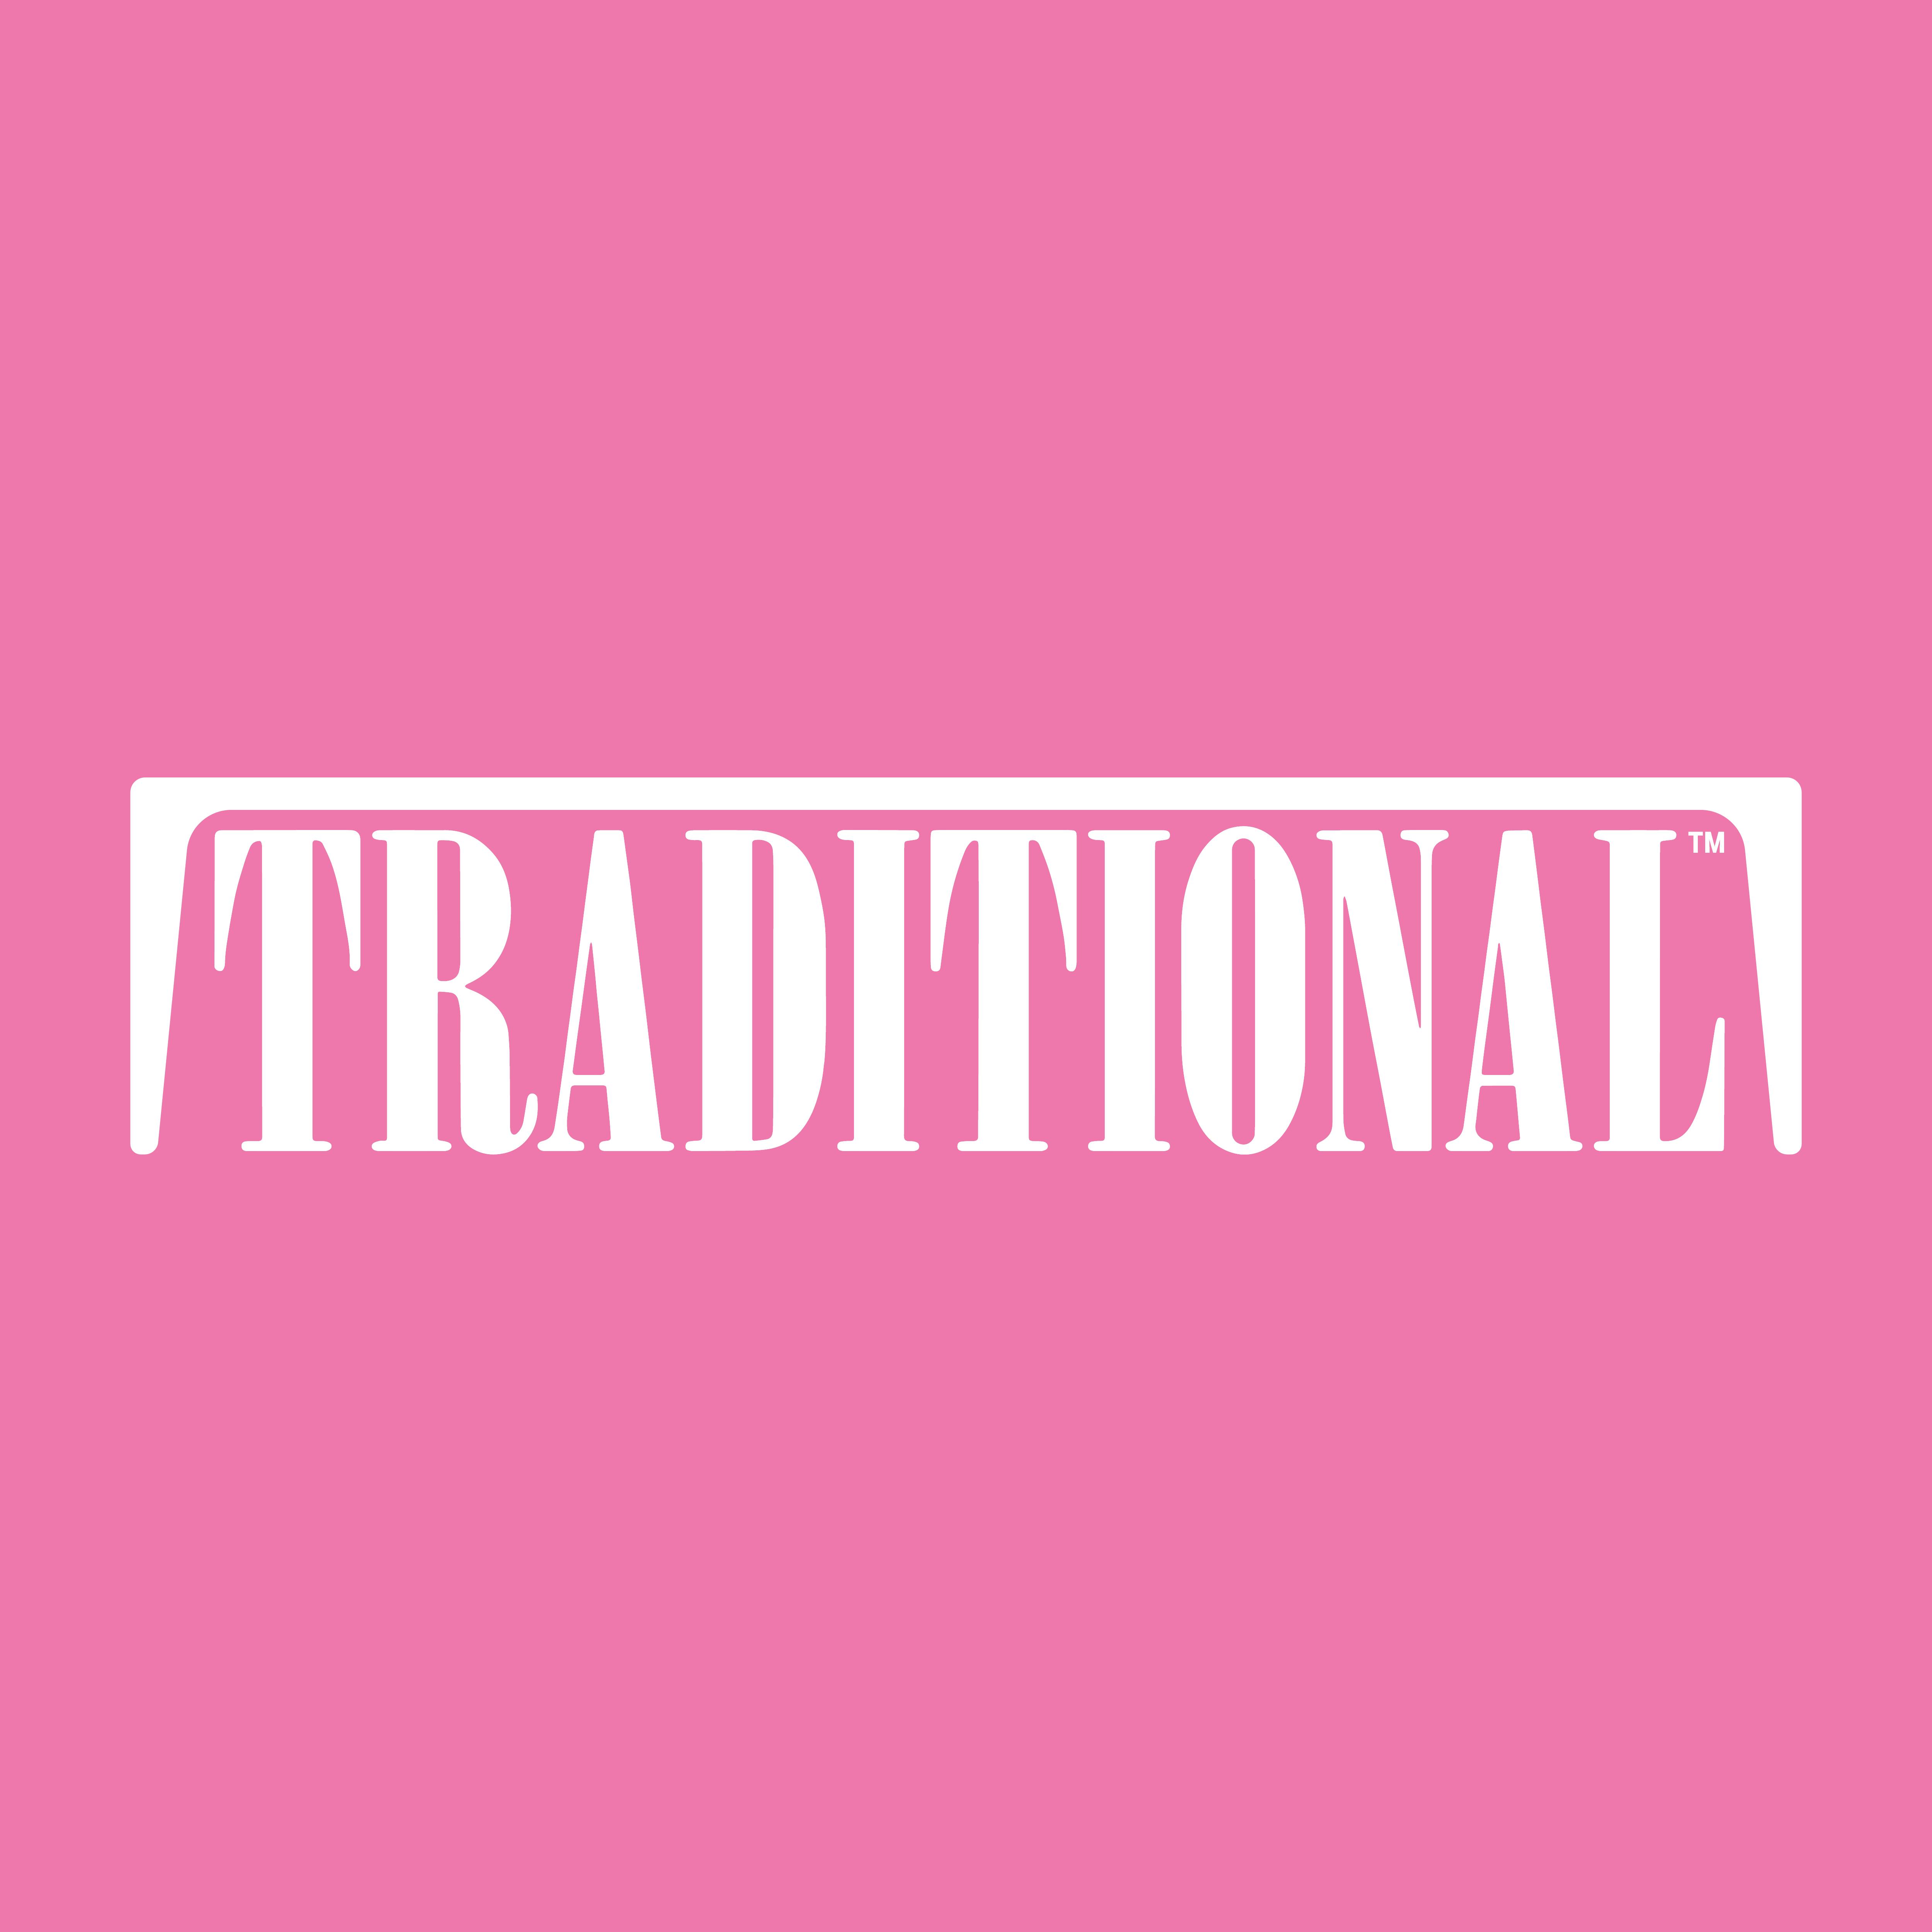 Traditional - Boyle Heights-logo